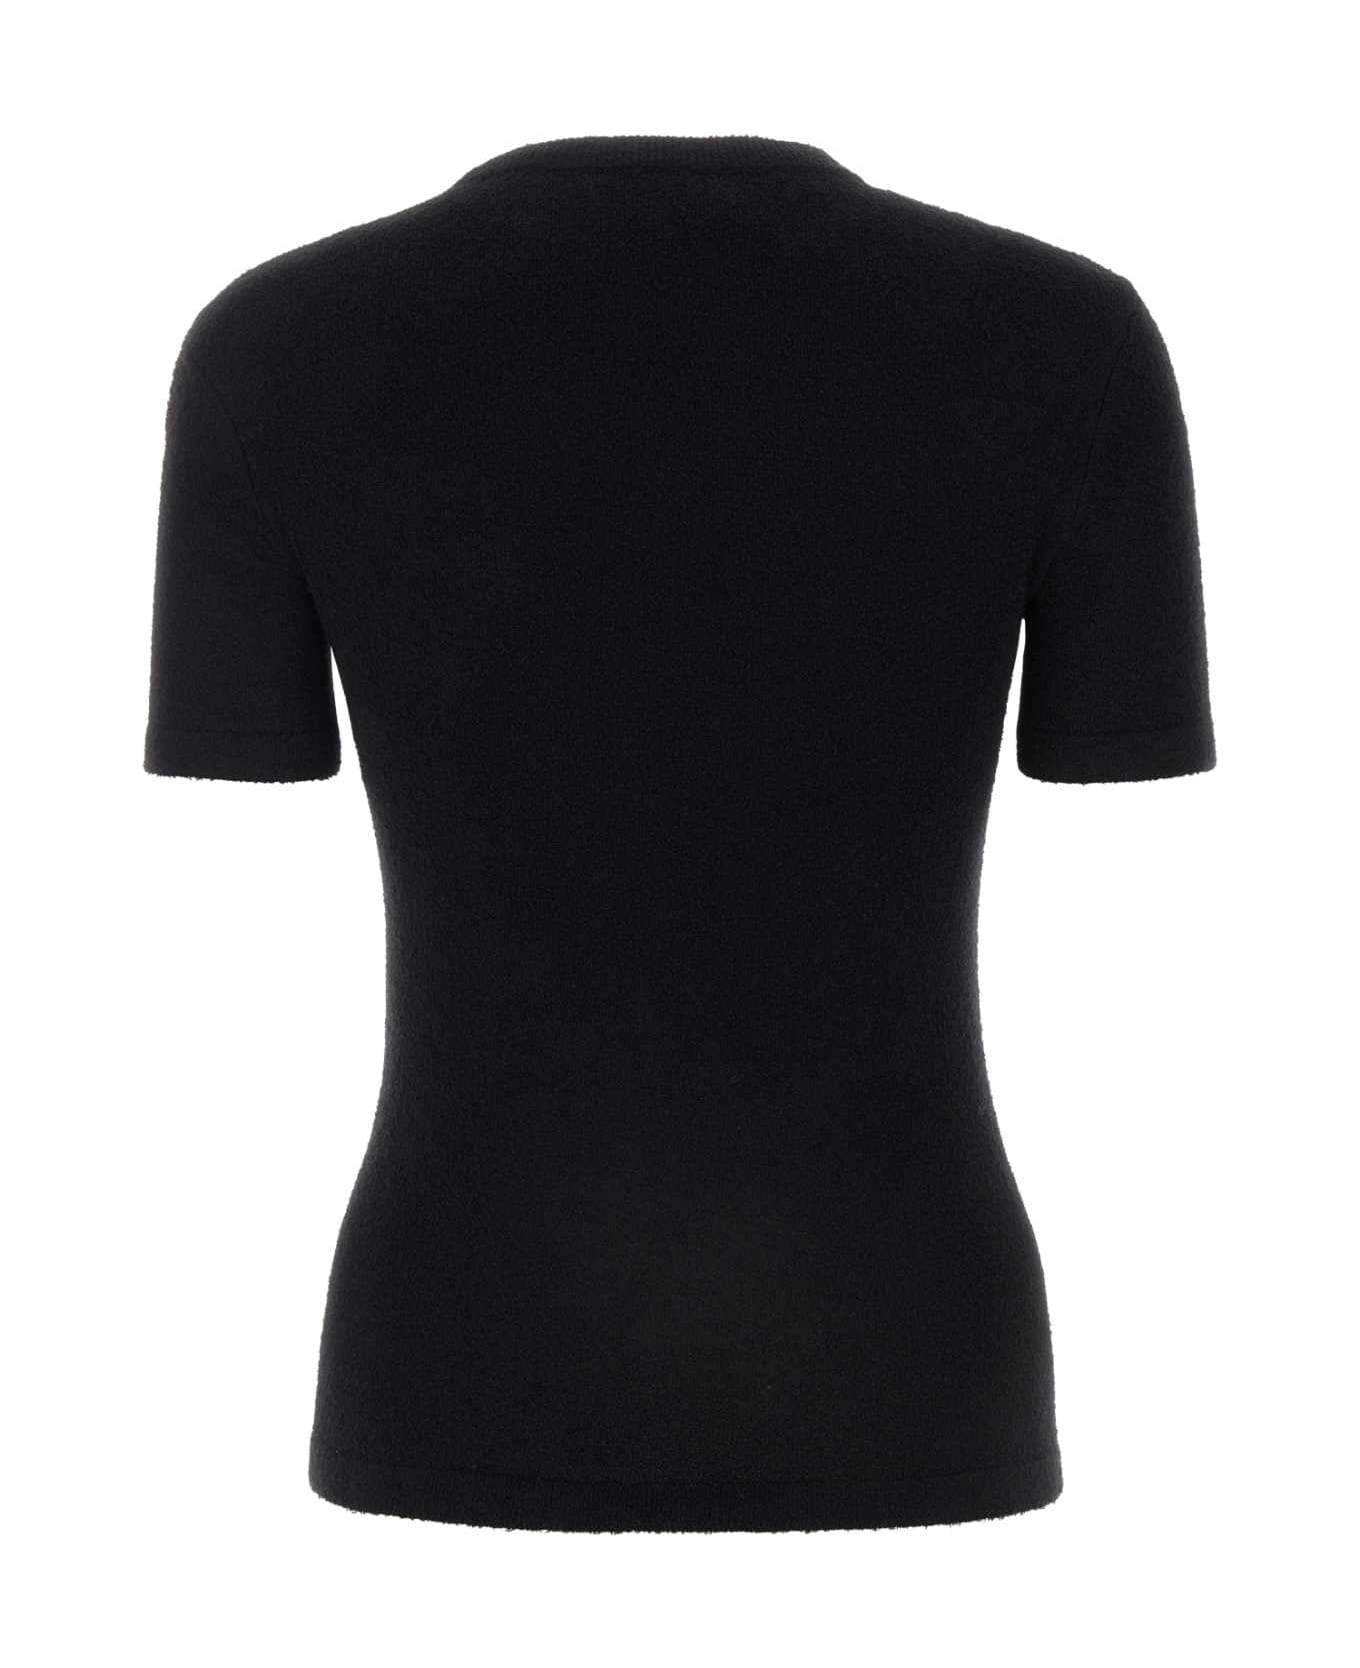 Balenciaga Black Terry Fabric T-shirt - Black